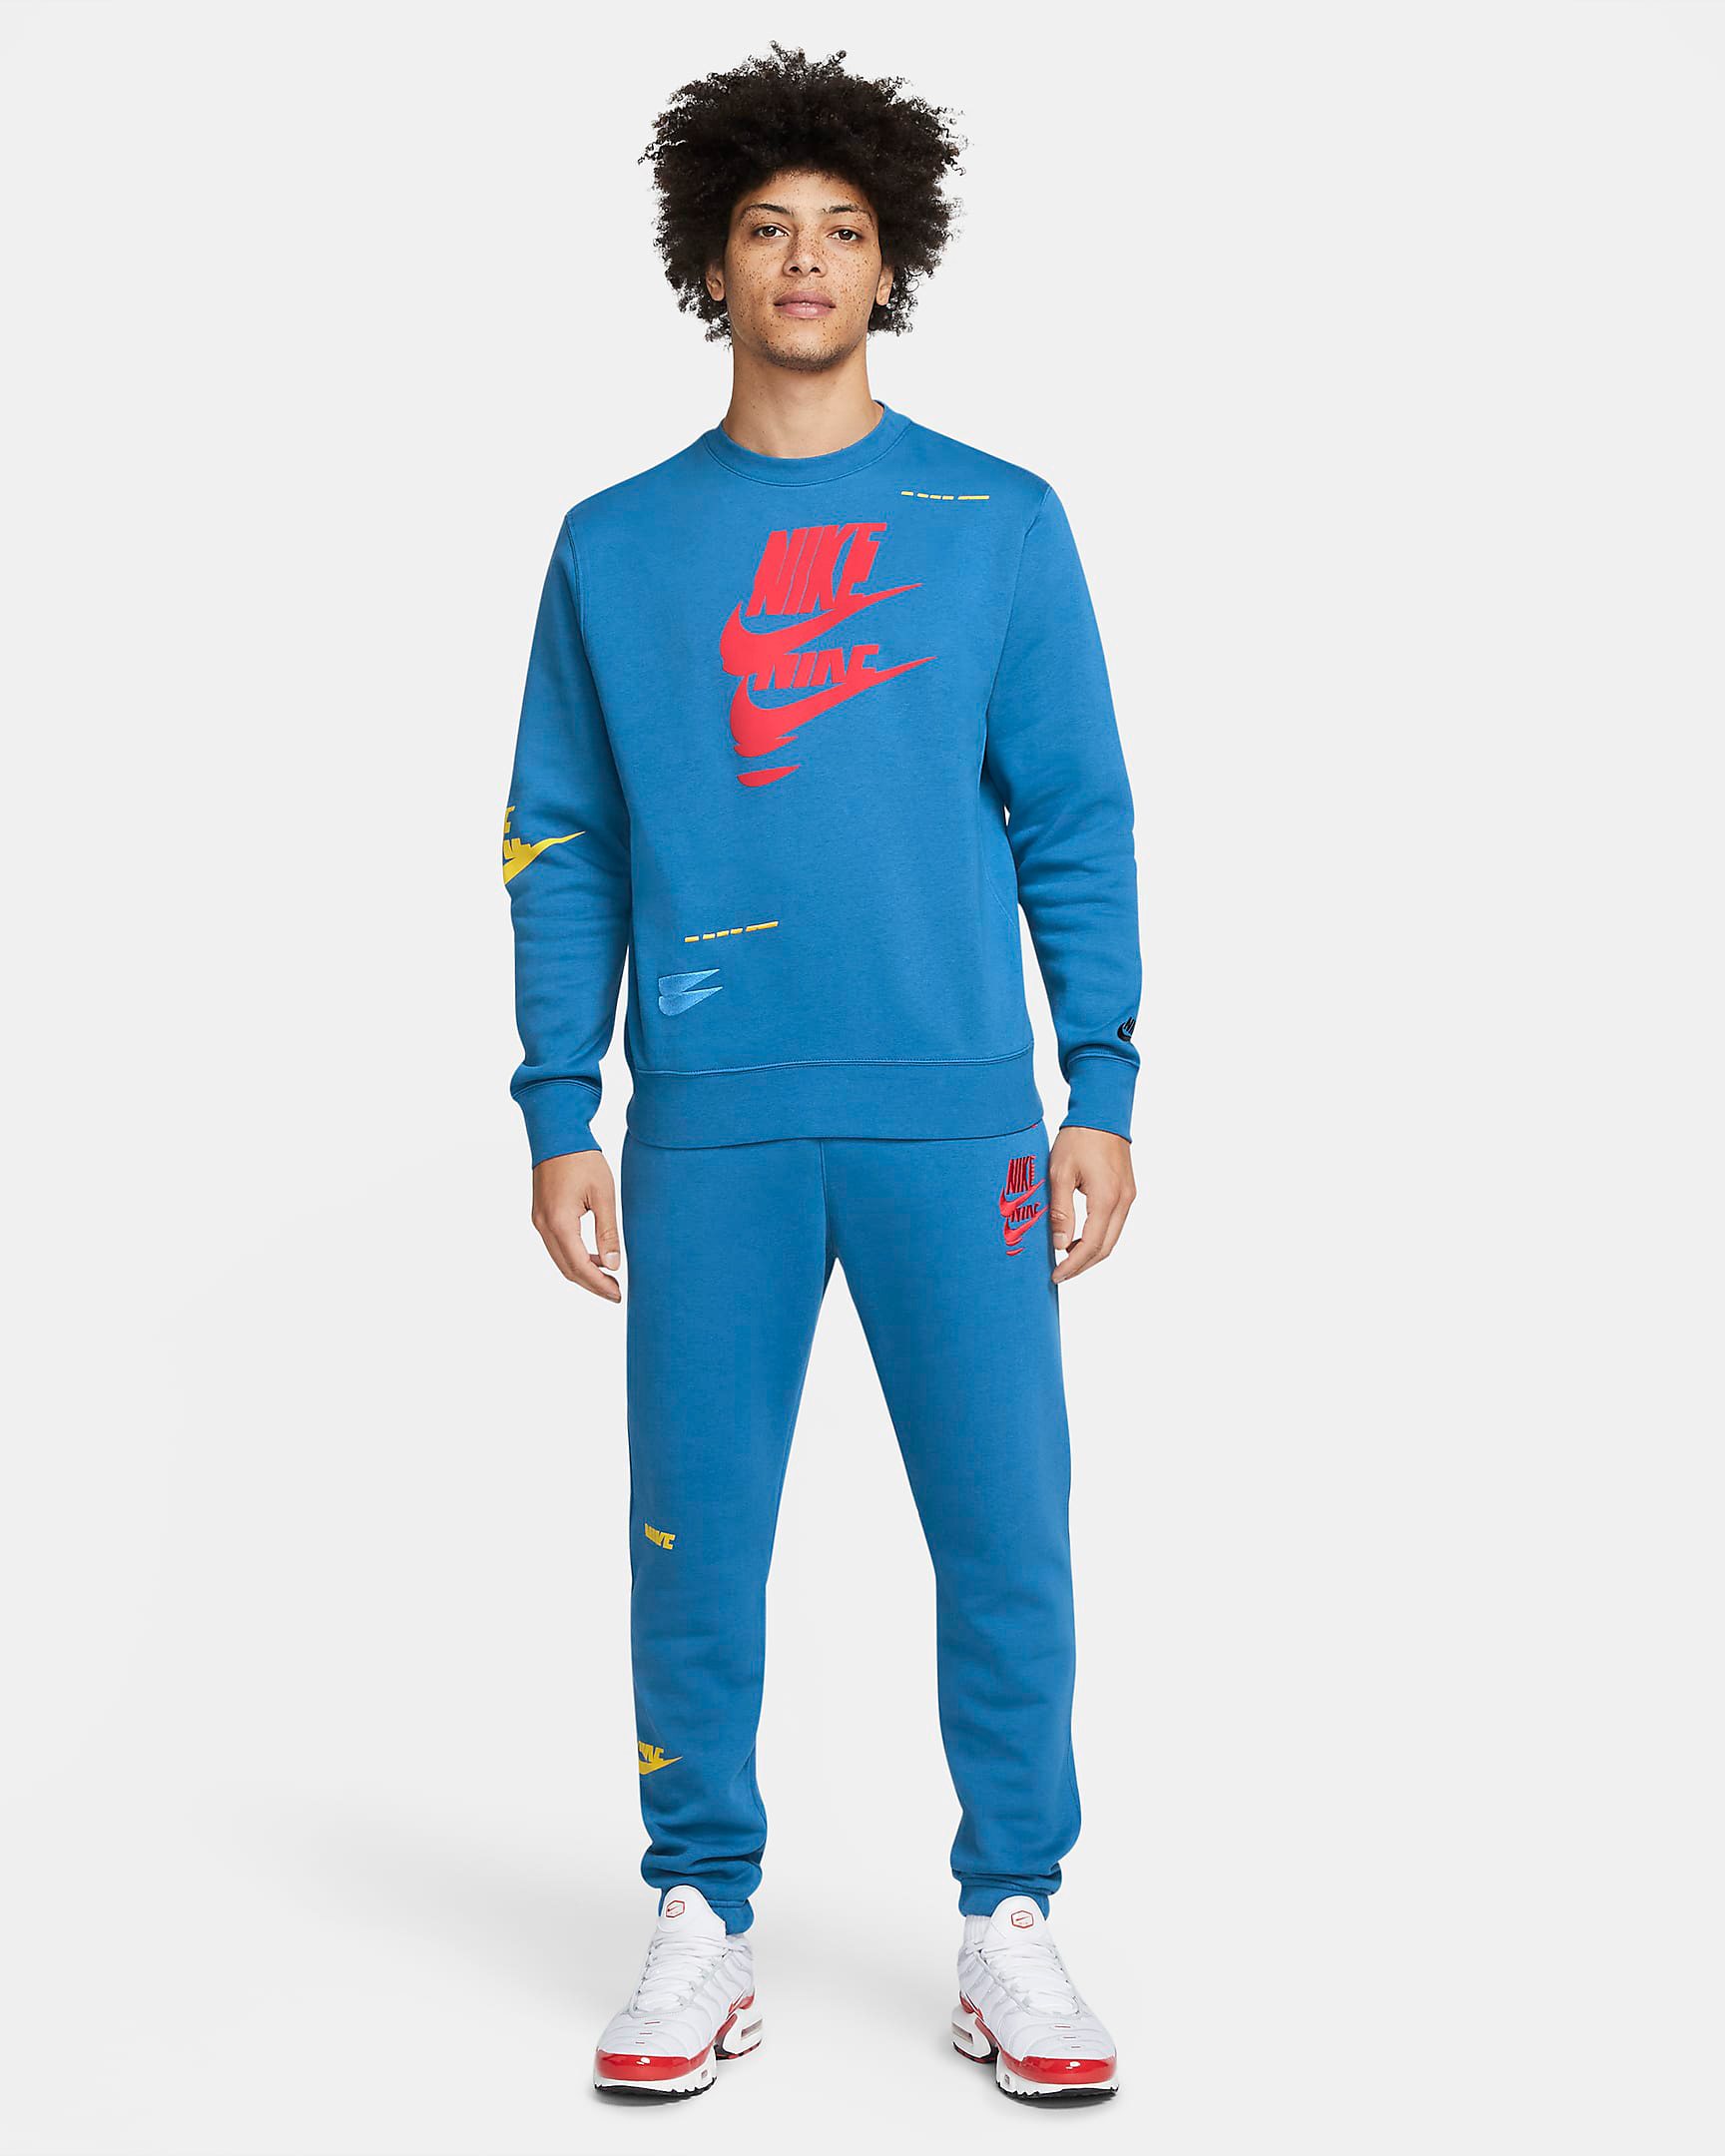 nike-dark-marina-blue-sport-essentials-sweatshirt-pants-outfit